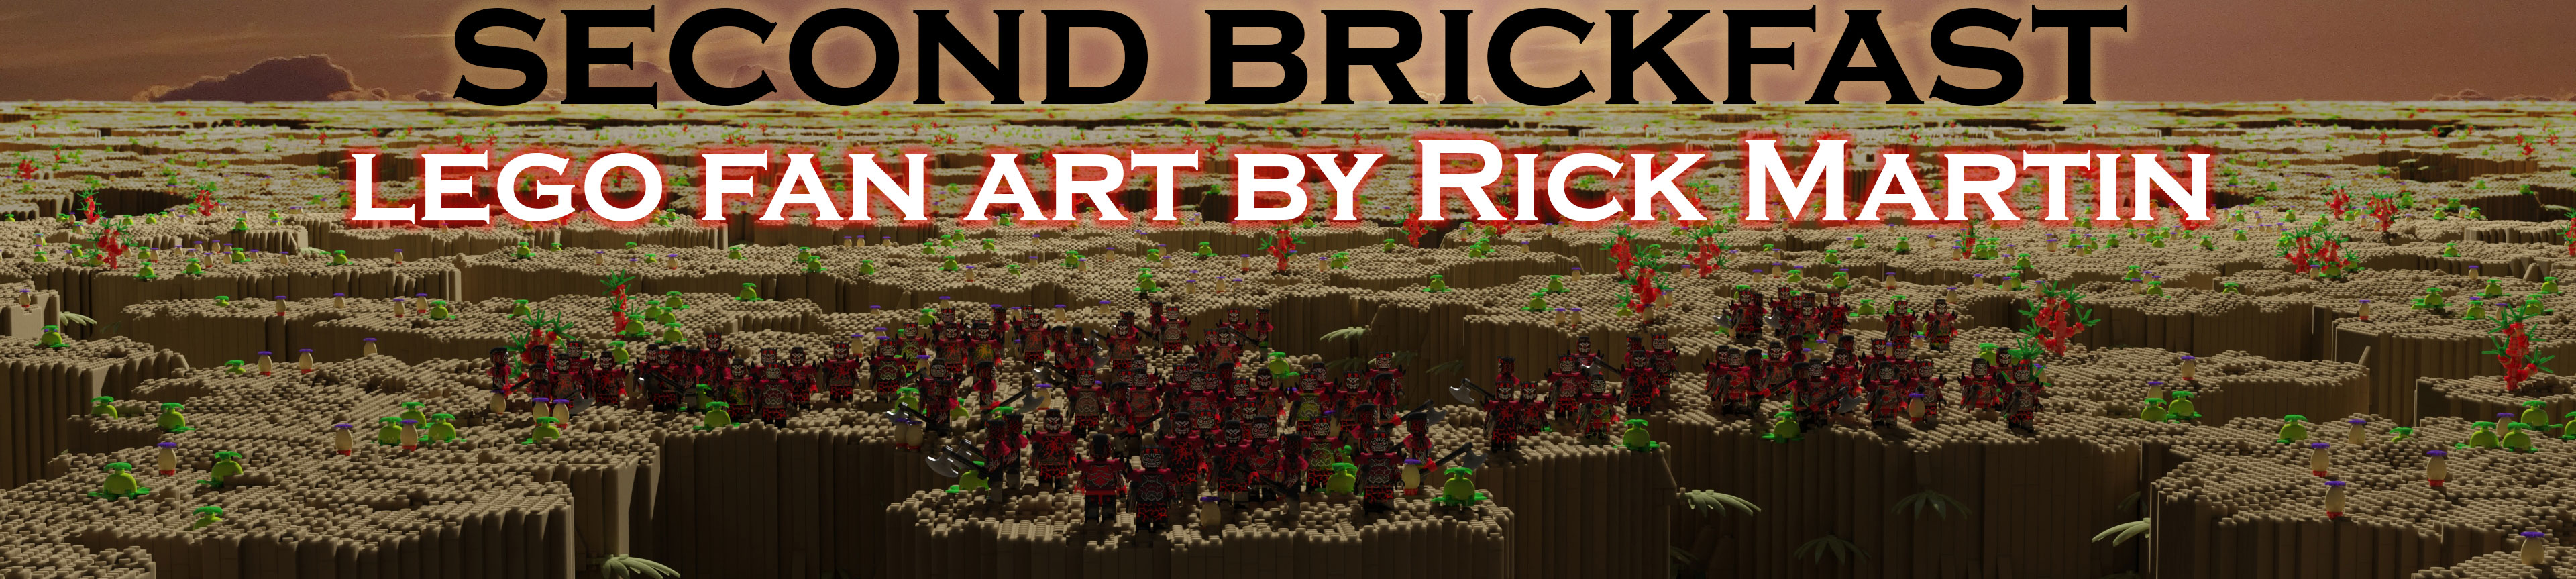 Second Brickfast